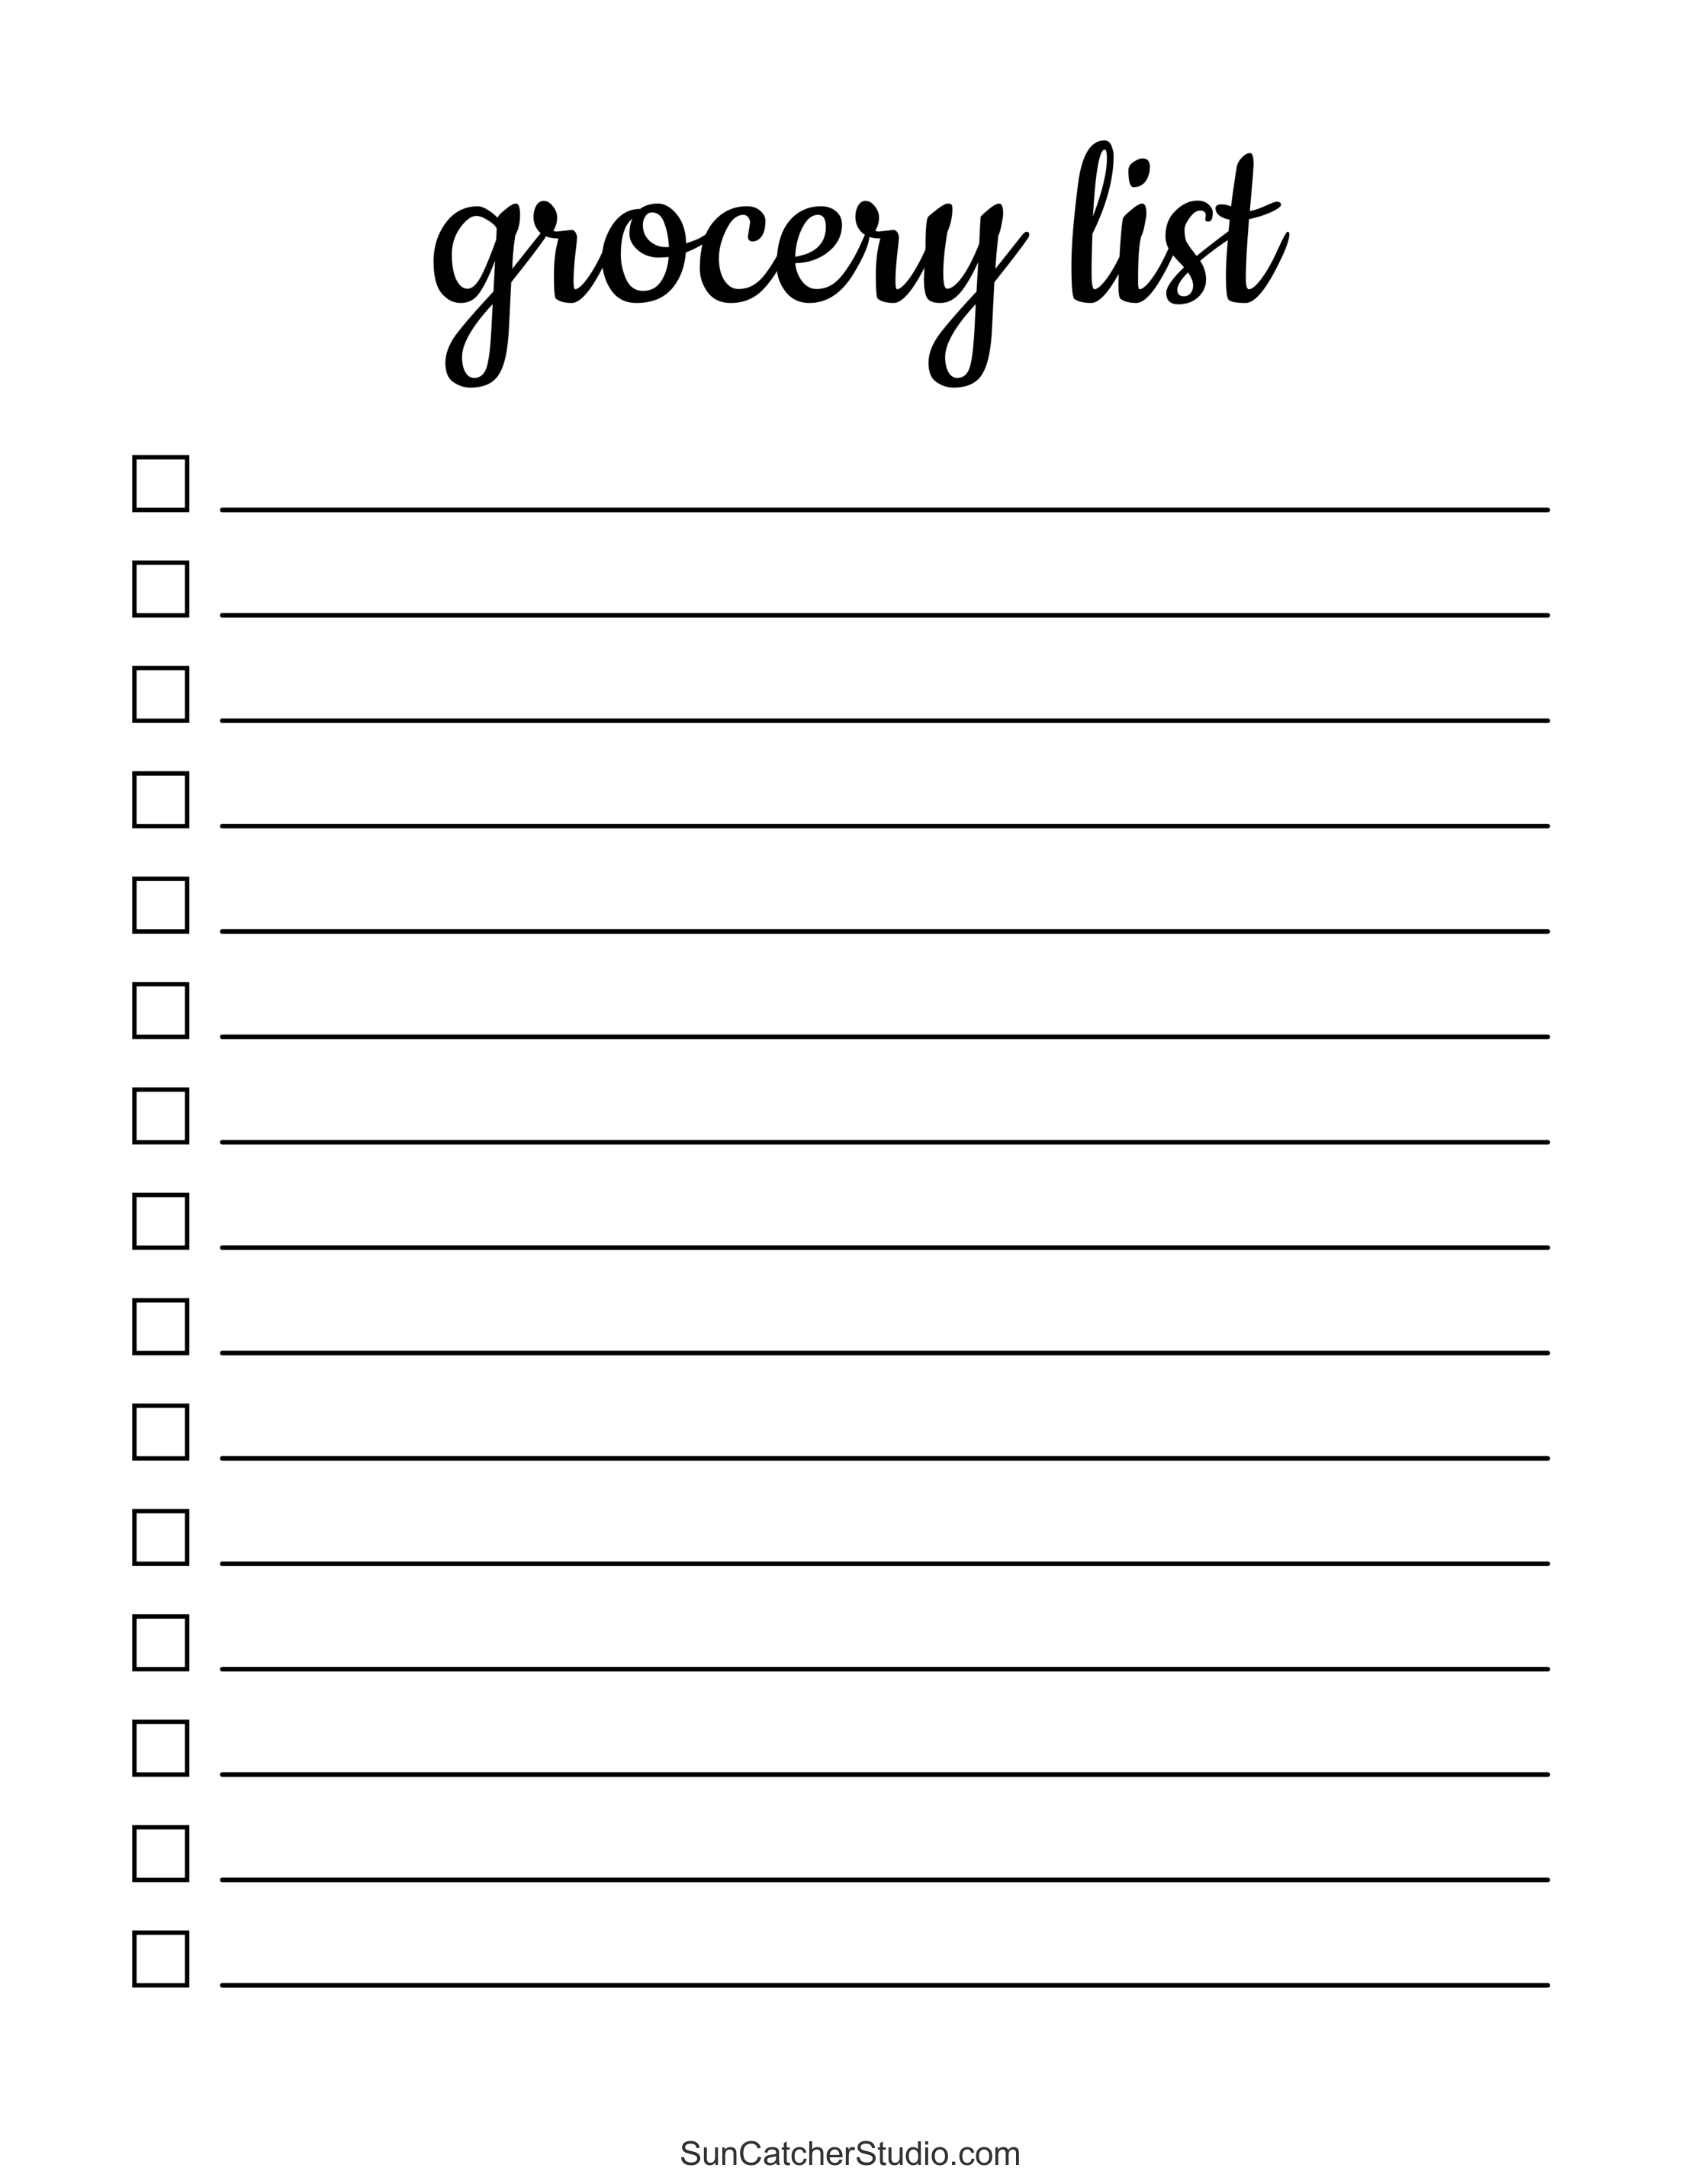 FREE PRINTABLE Household shopping list & list template